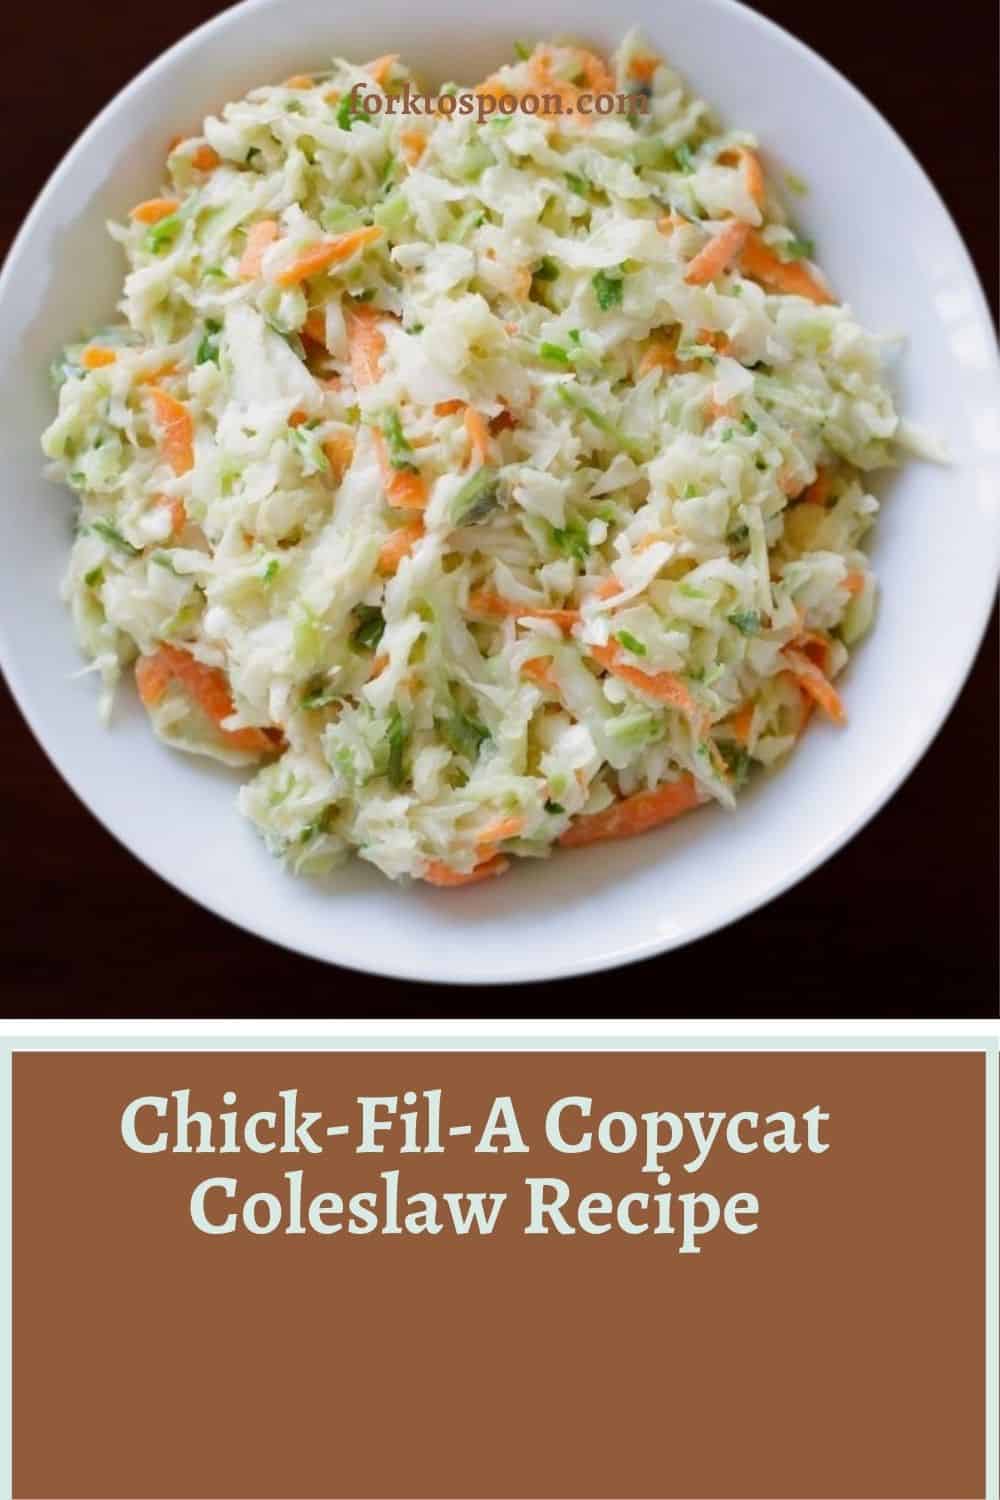 Chick-Fil-A Copycat Coleslaw Recipe